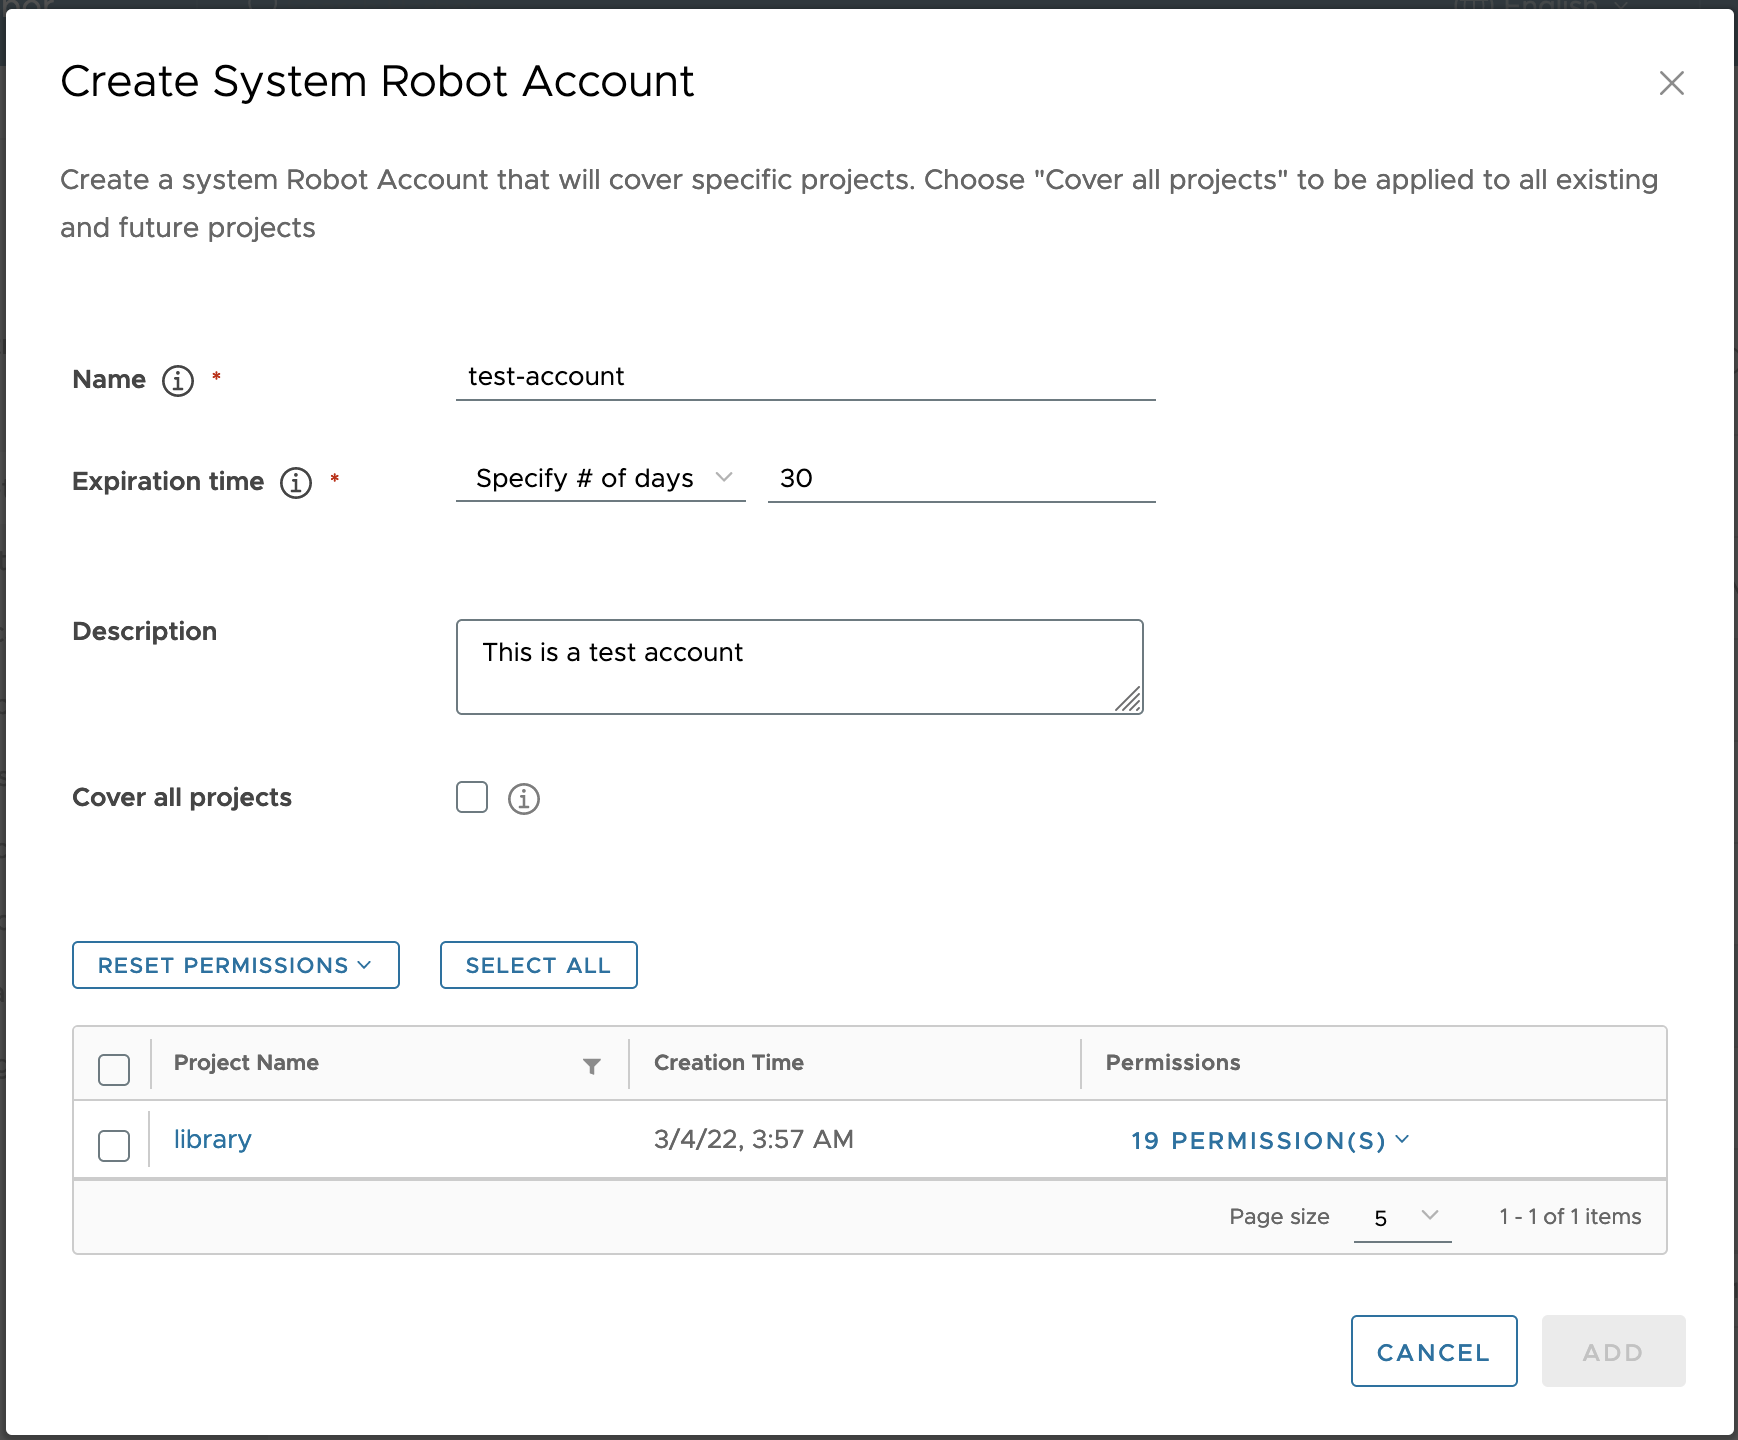 Create system robot account window